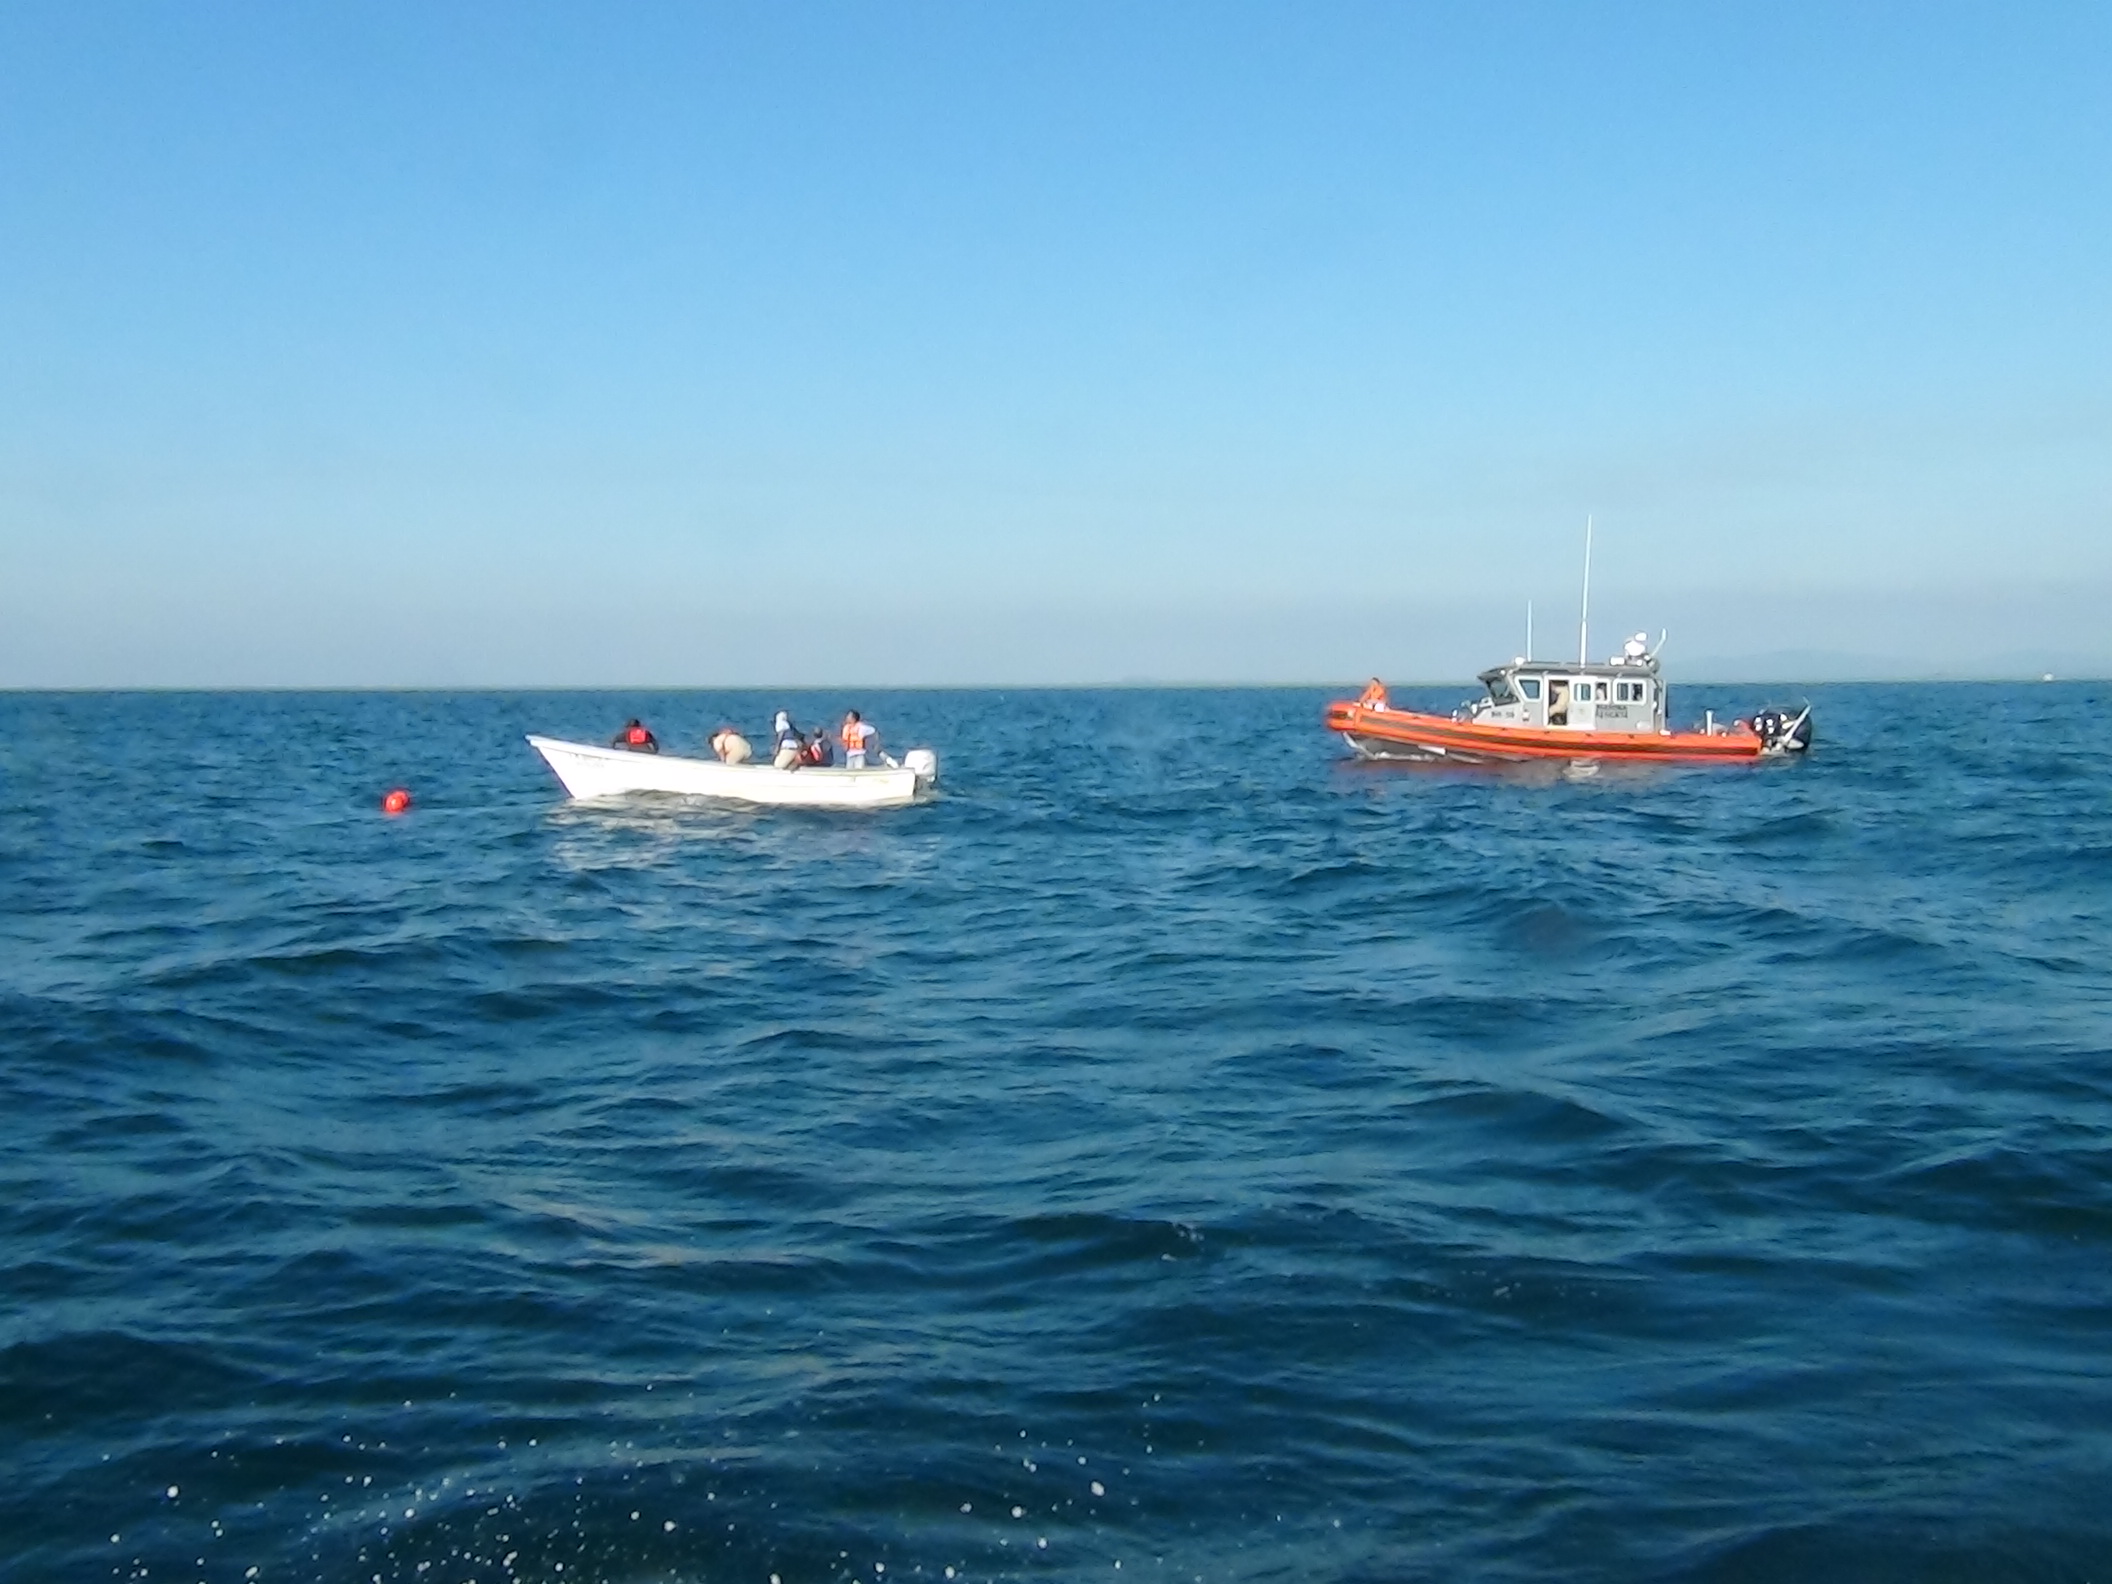 Marinos liberan a ballena atrapada en redes de pesca en Nayarit